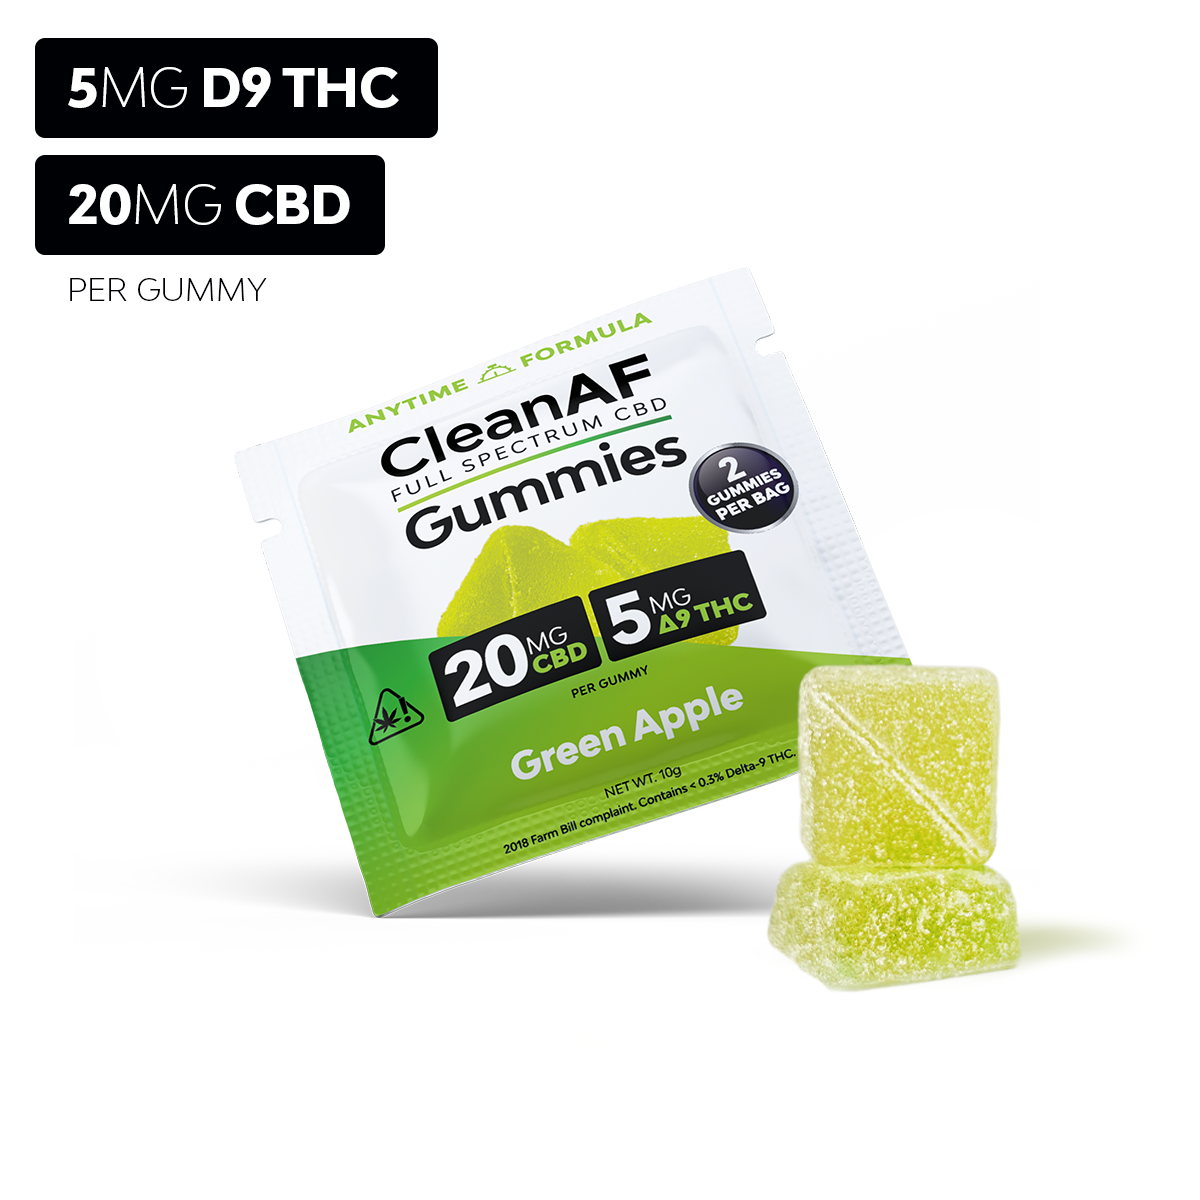 Delta-9 THC + CBD Gummies - Green Apple